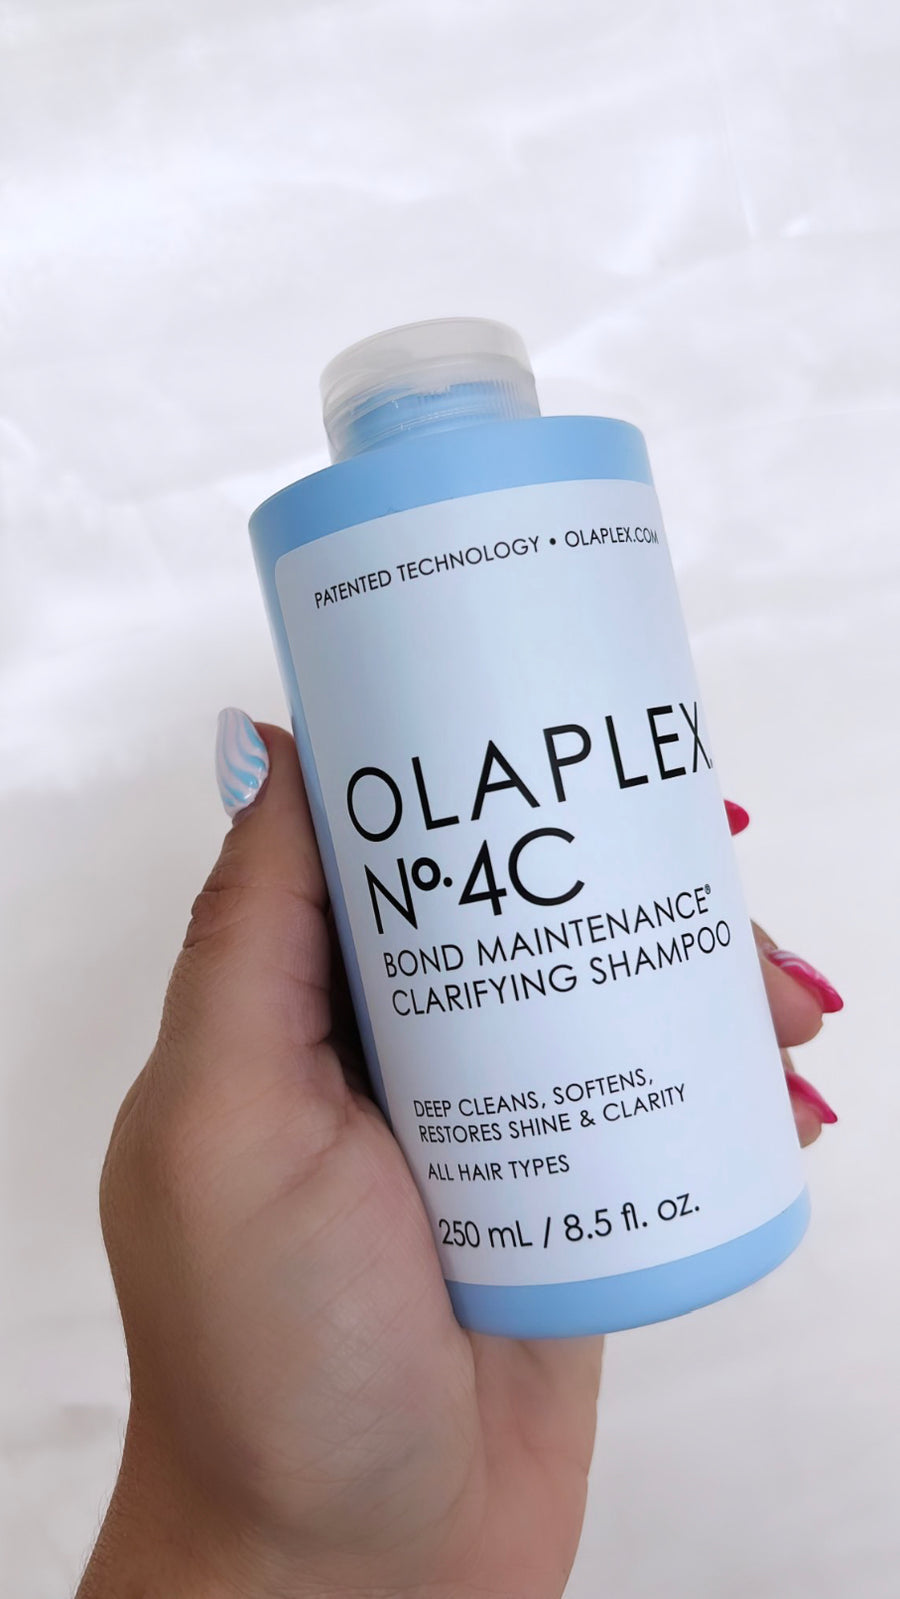 Olaplex No.4C Bond Maintenance Clarifying Shampoo 8.5oz